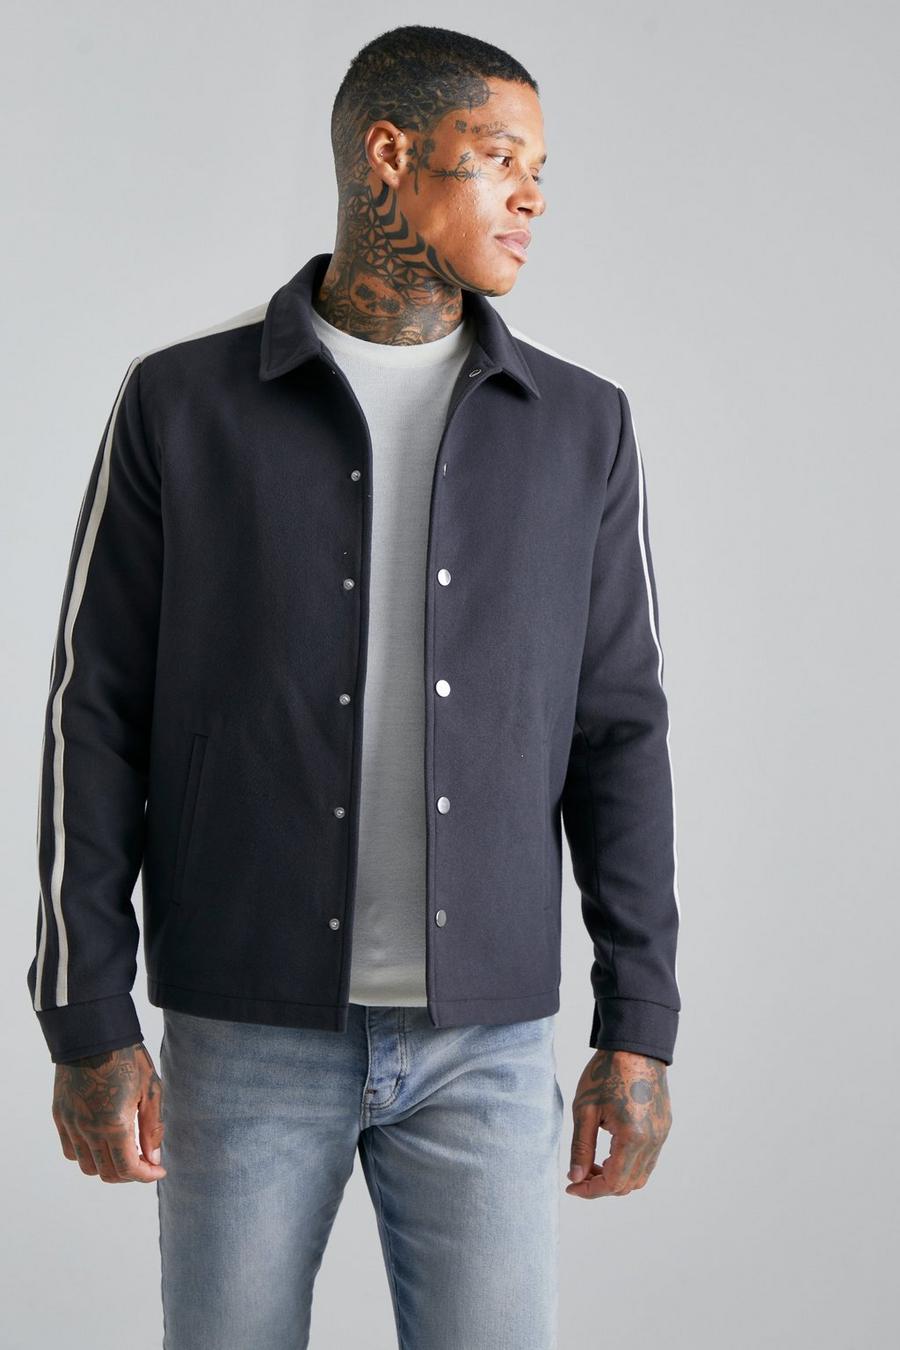 Grey Wool Look Jacket With Contrast Sleeve Stripe